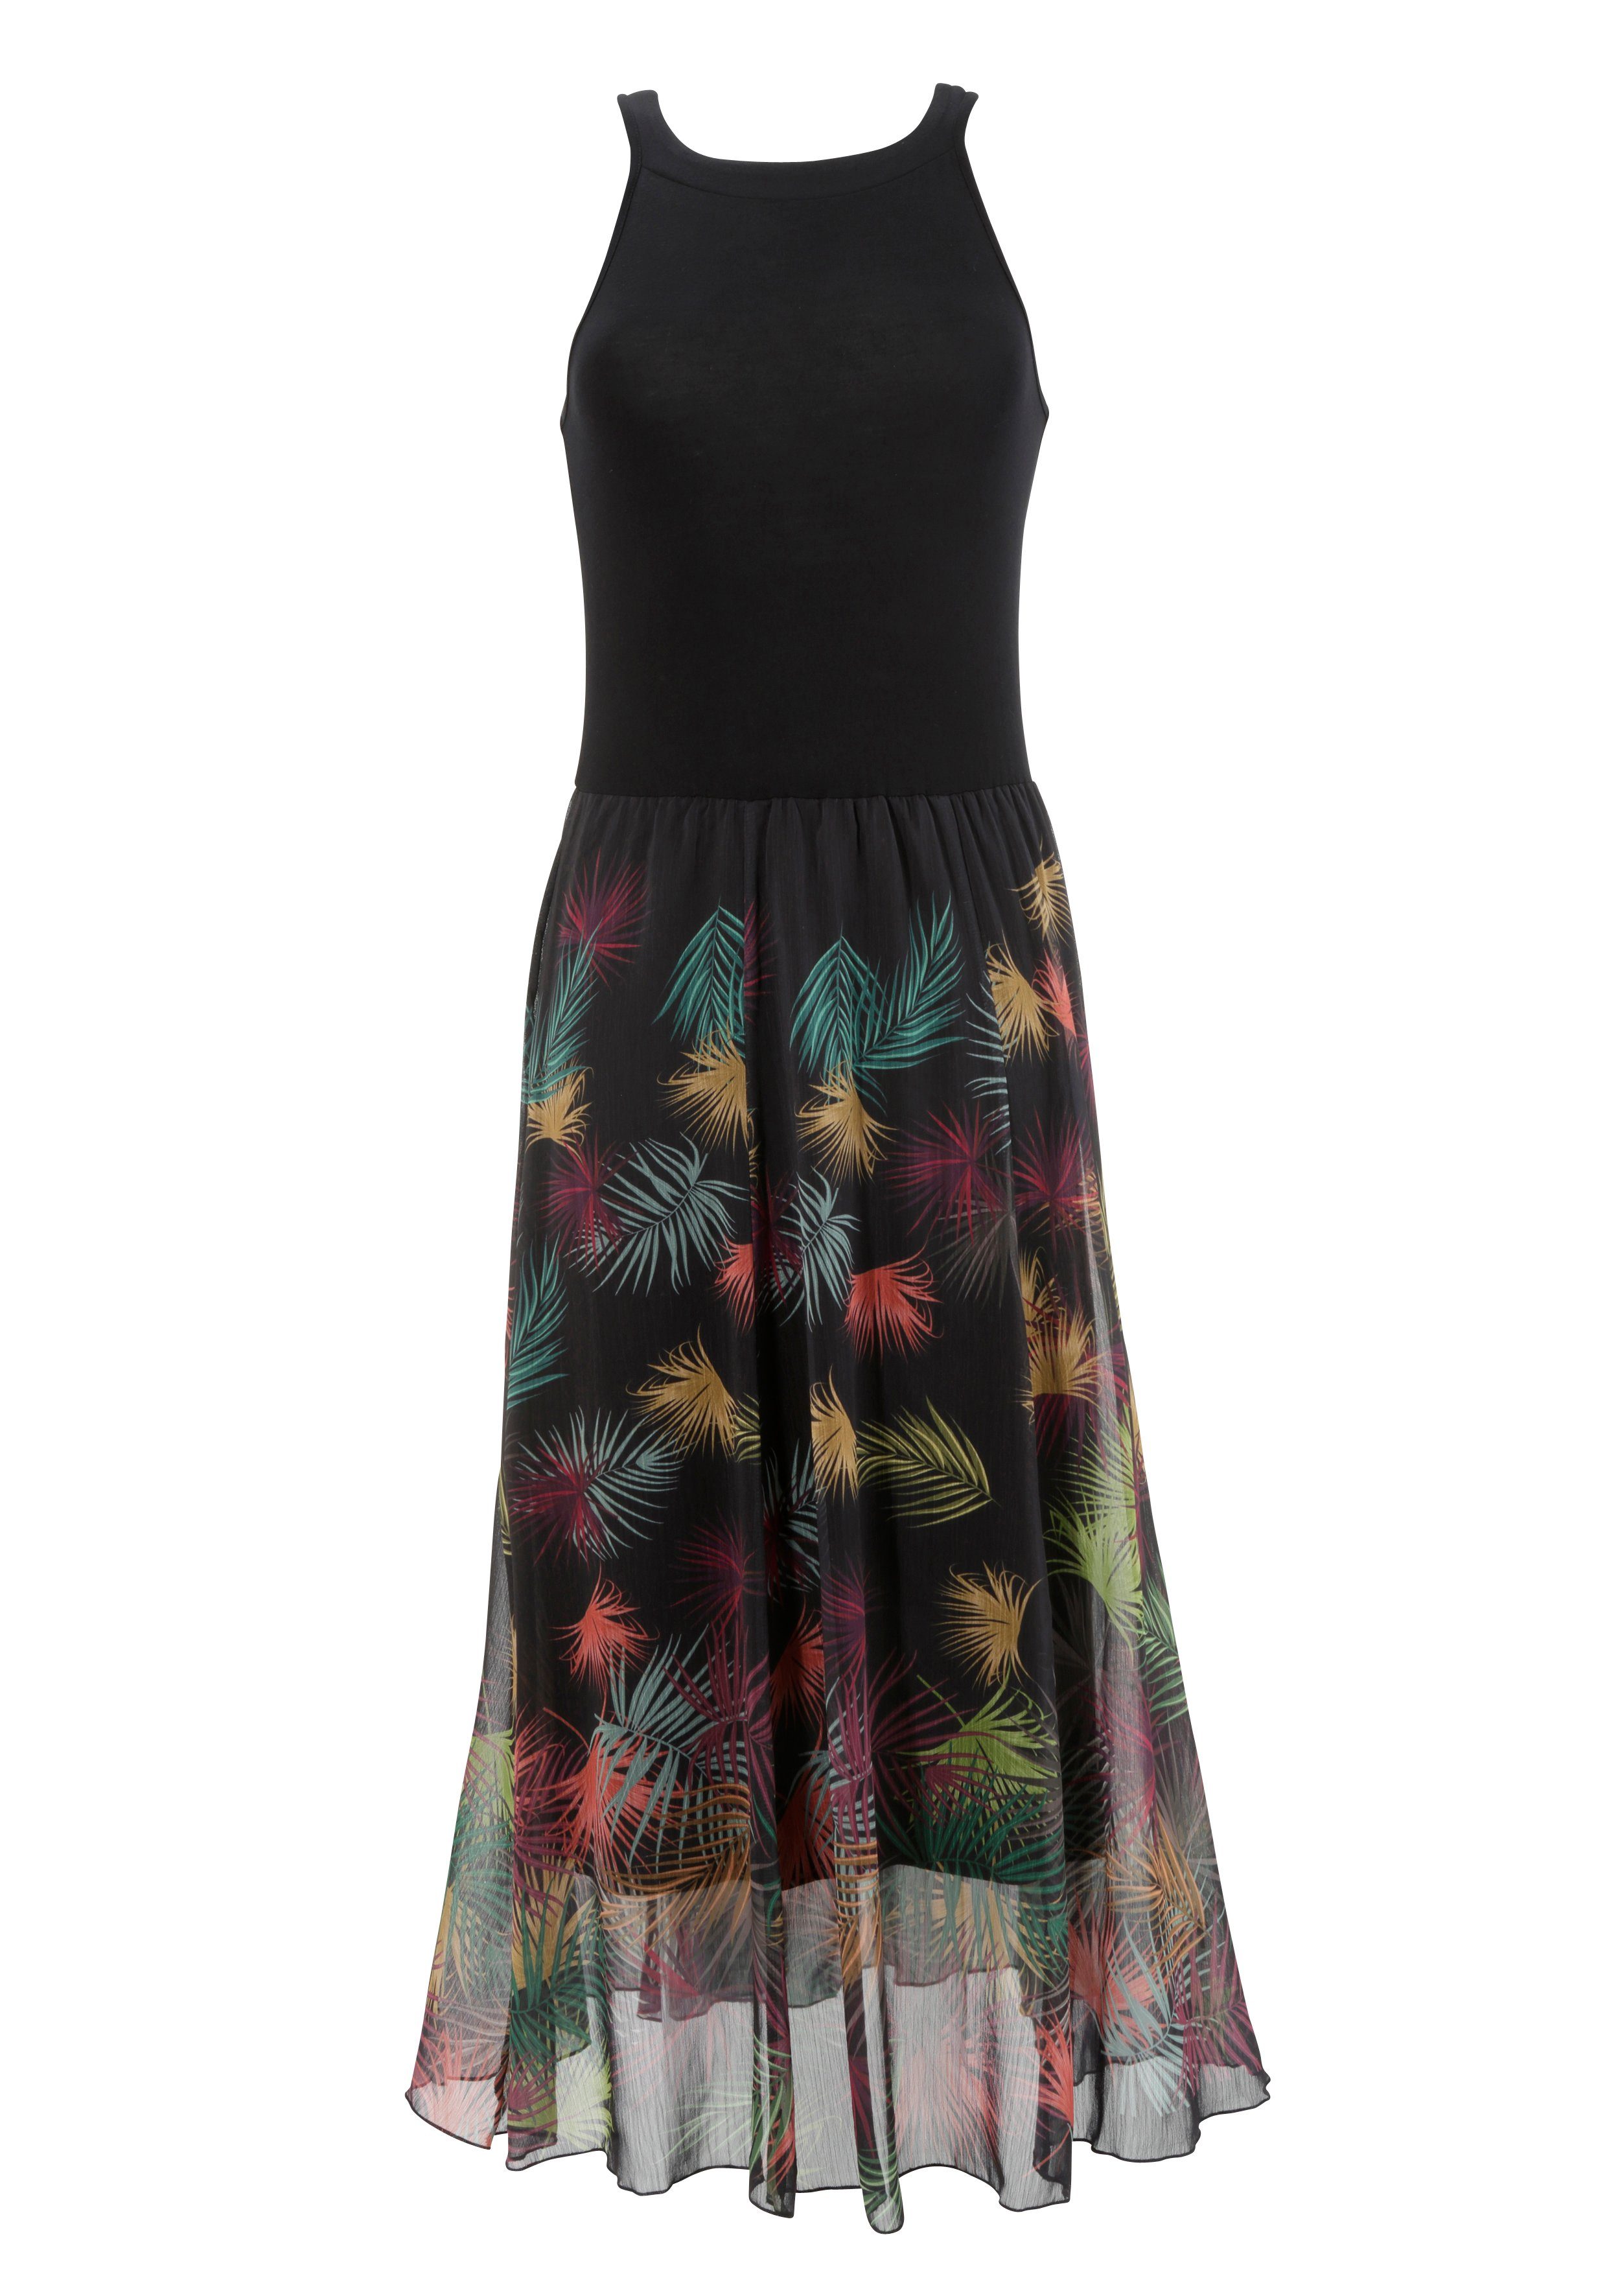 Blätterdruck SELECTED mit Aniston Sommerkleid buntem